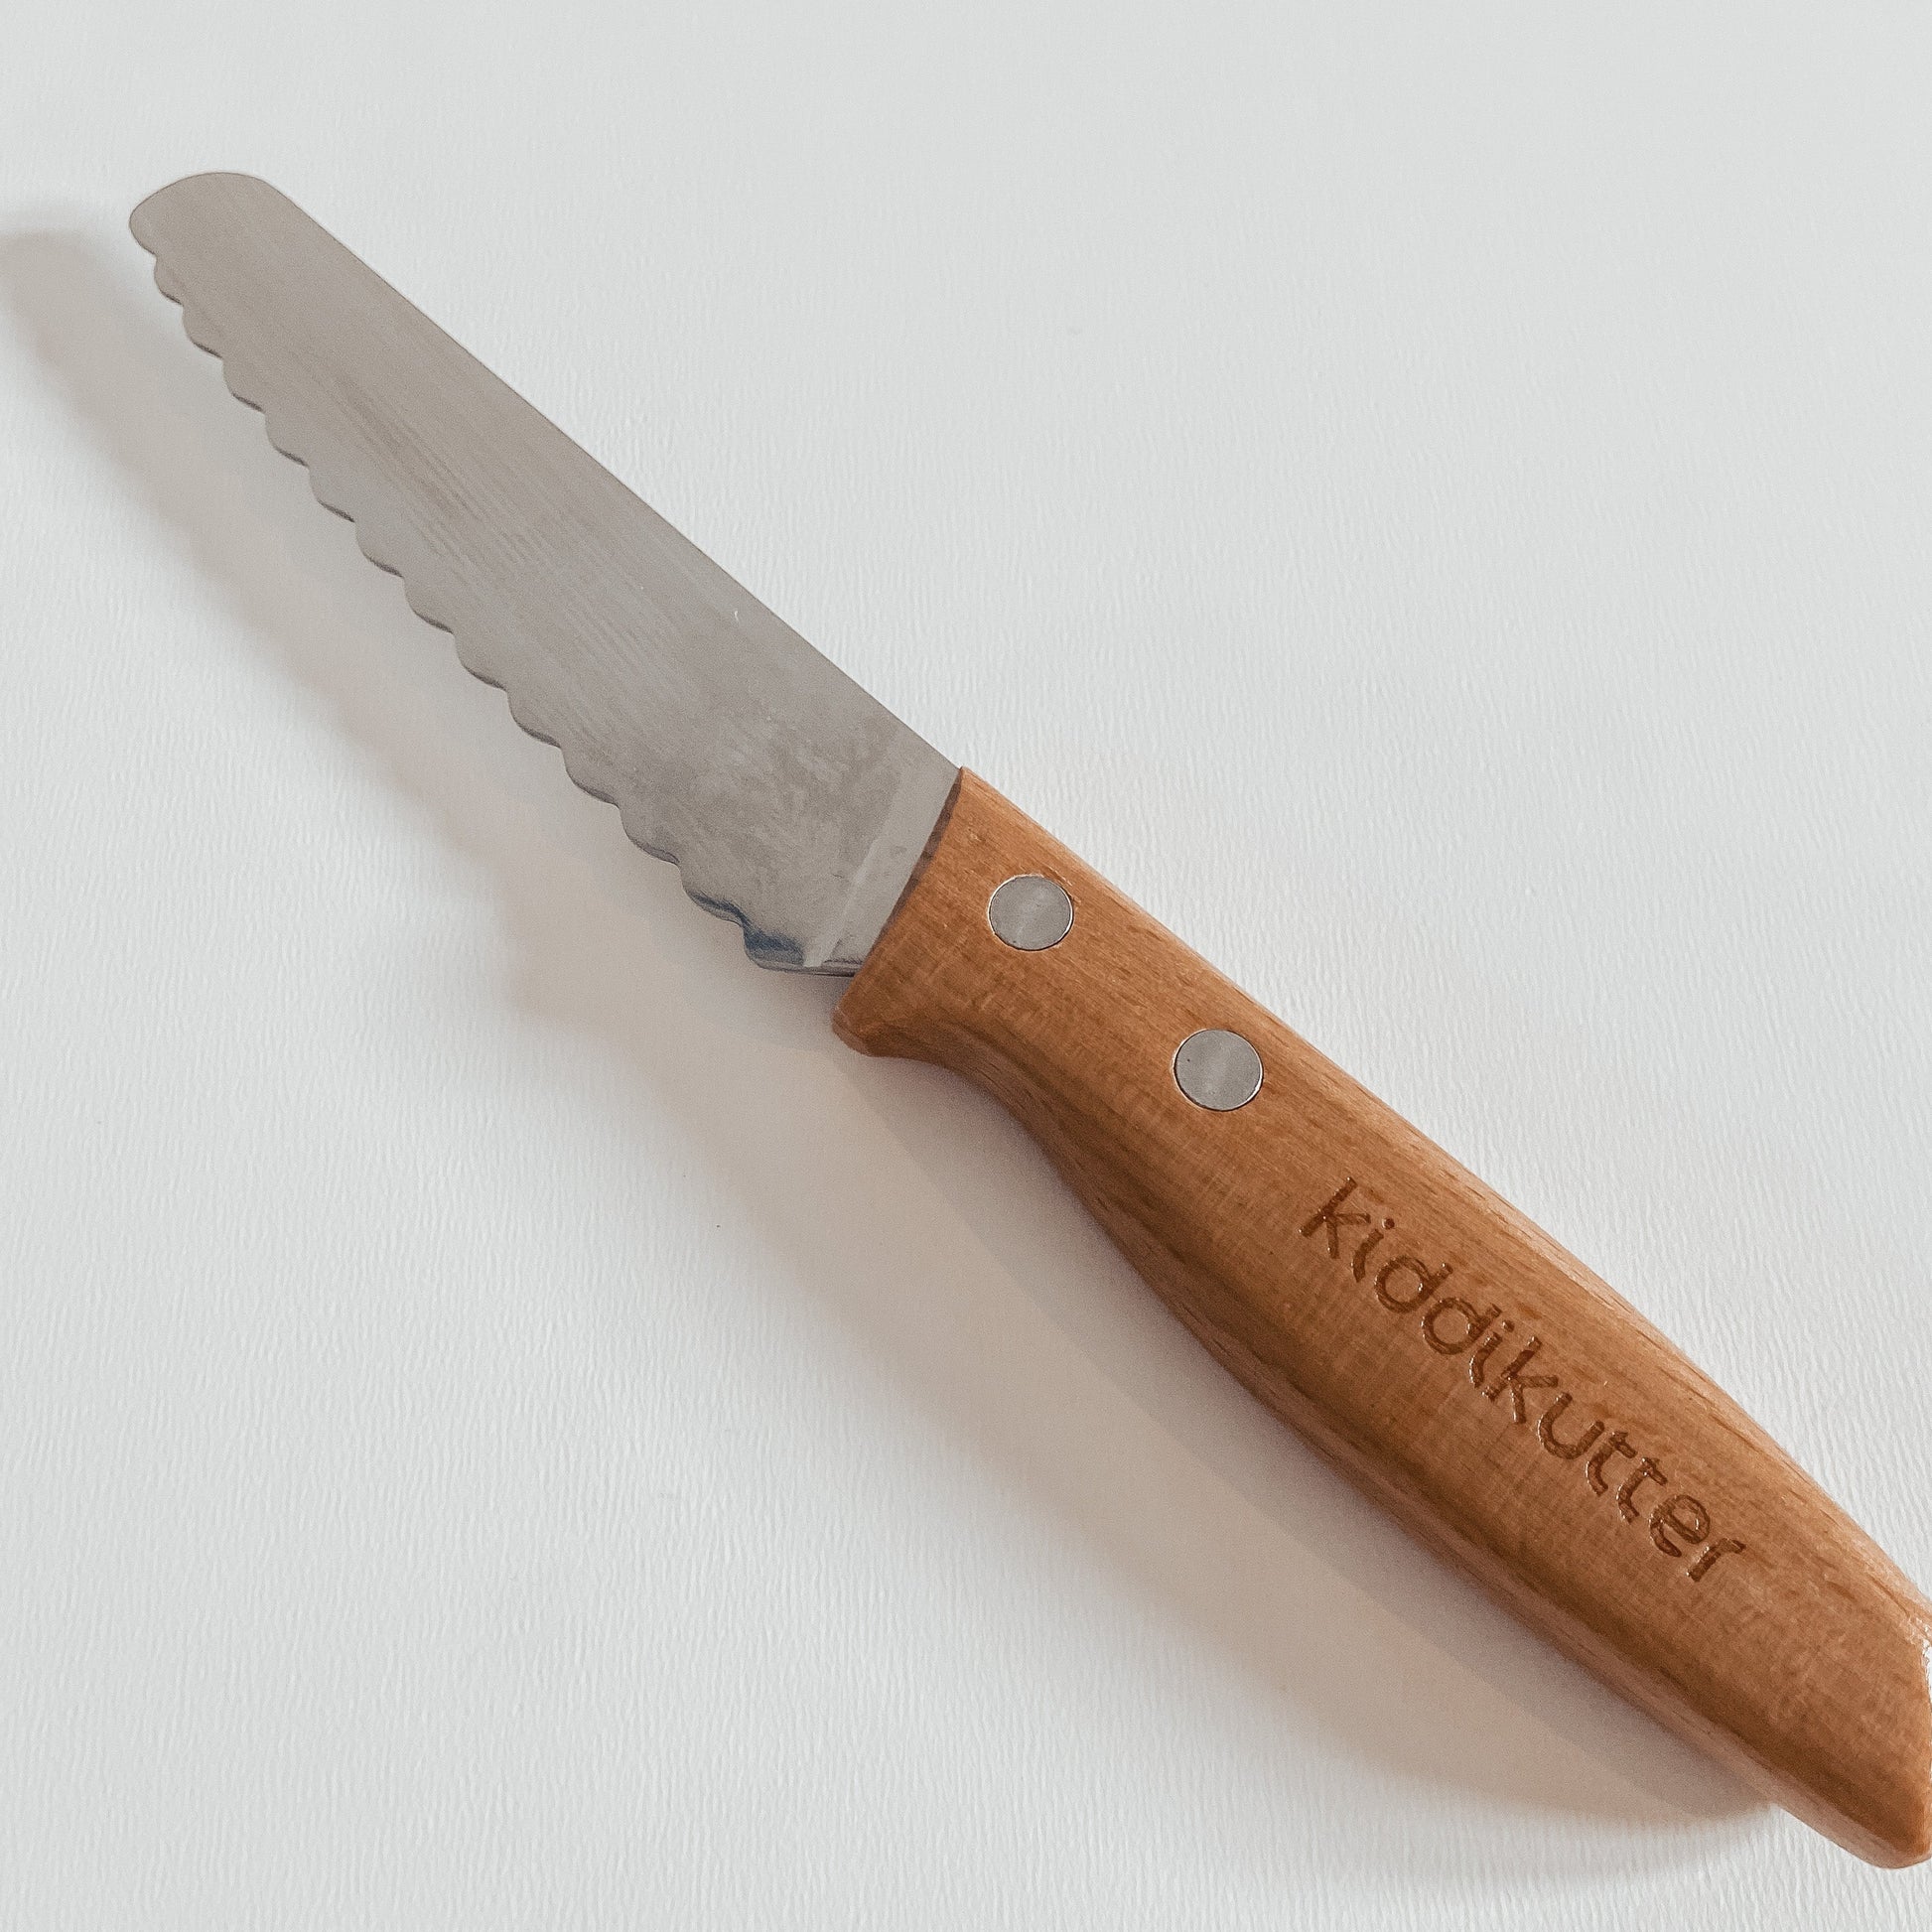 KiddiKutter Knife - Cuts food, not fingers! – Babylove Ltd